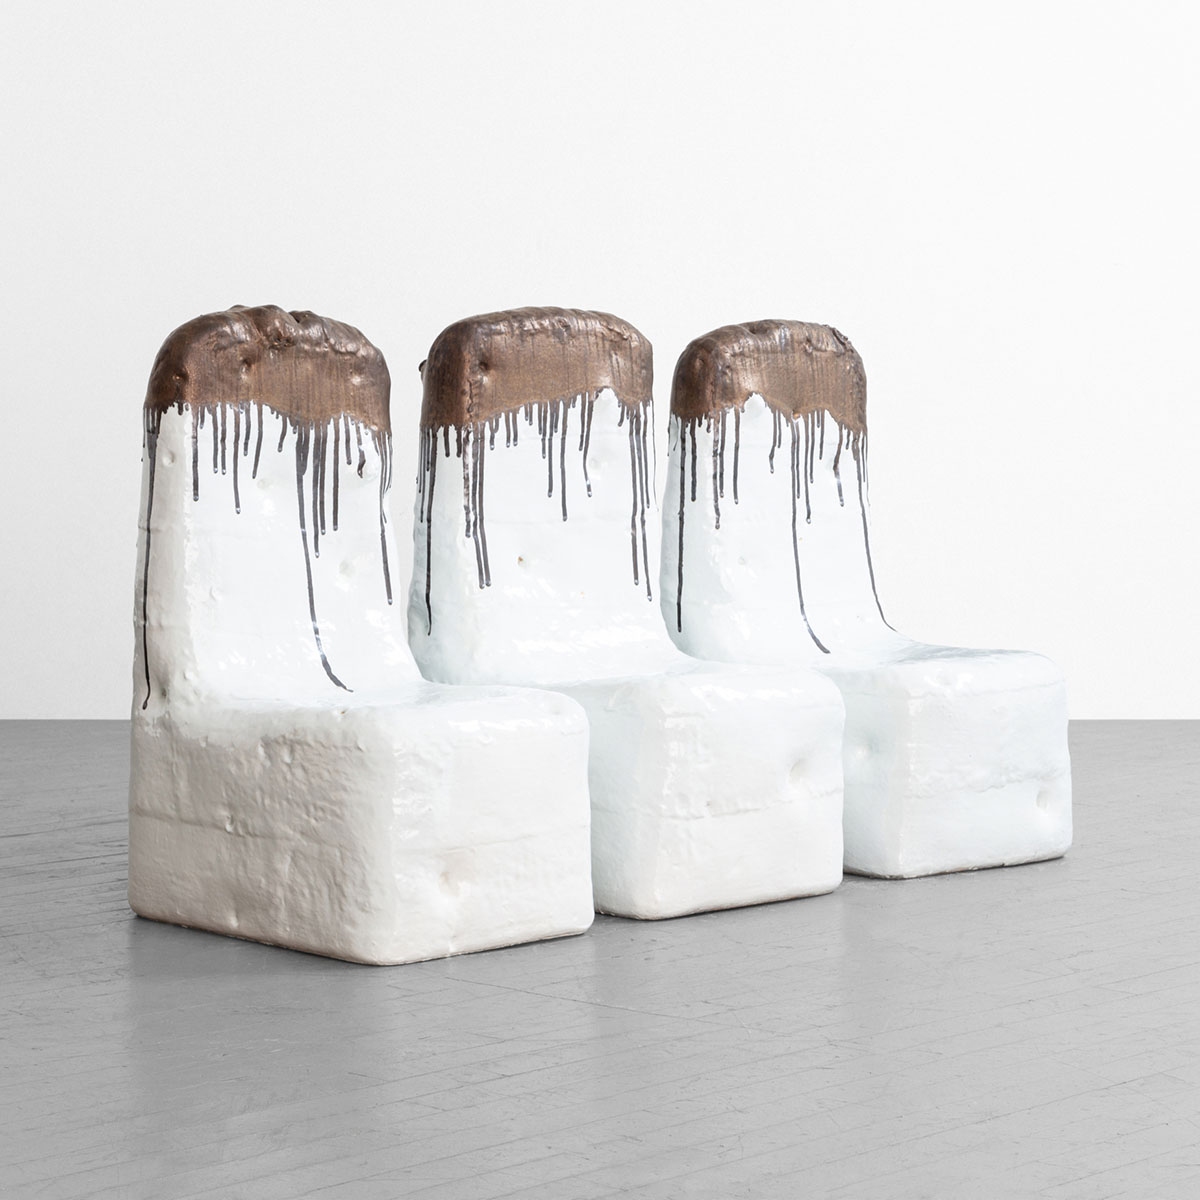 Hun-Chung Lee, Unique Glazed Ceramic Three Piece Sofa, 2021